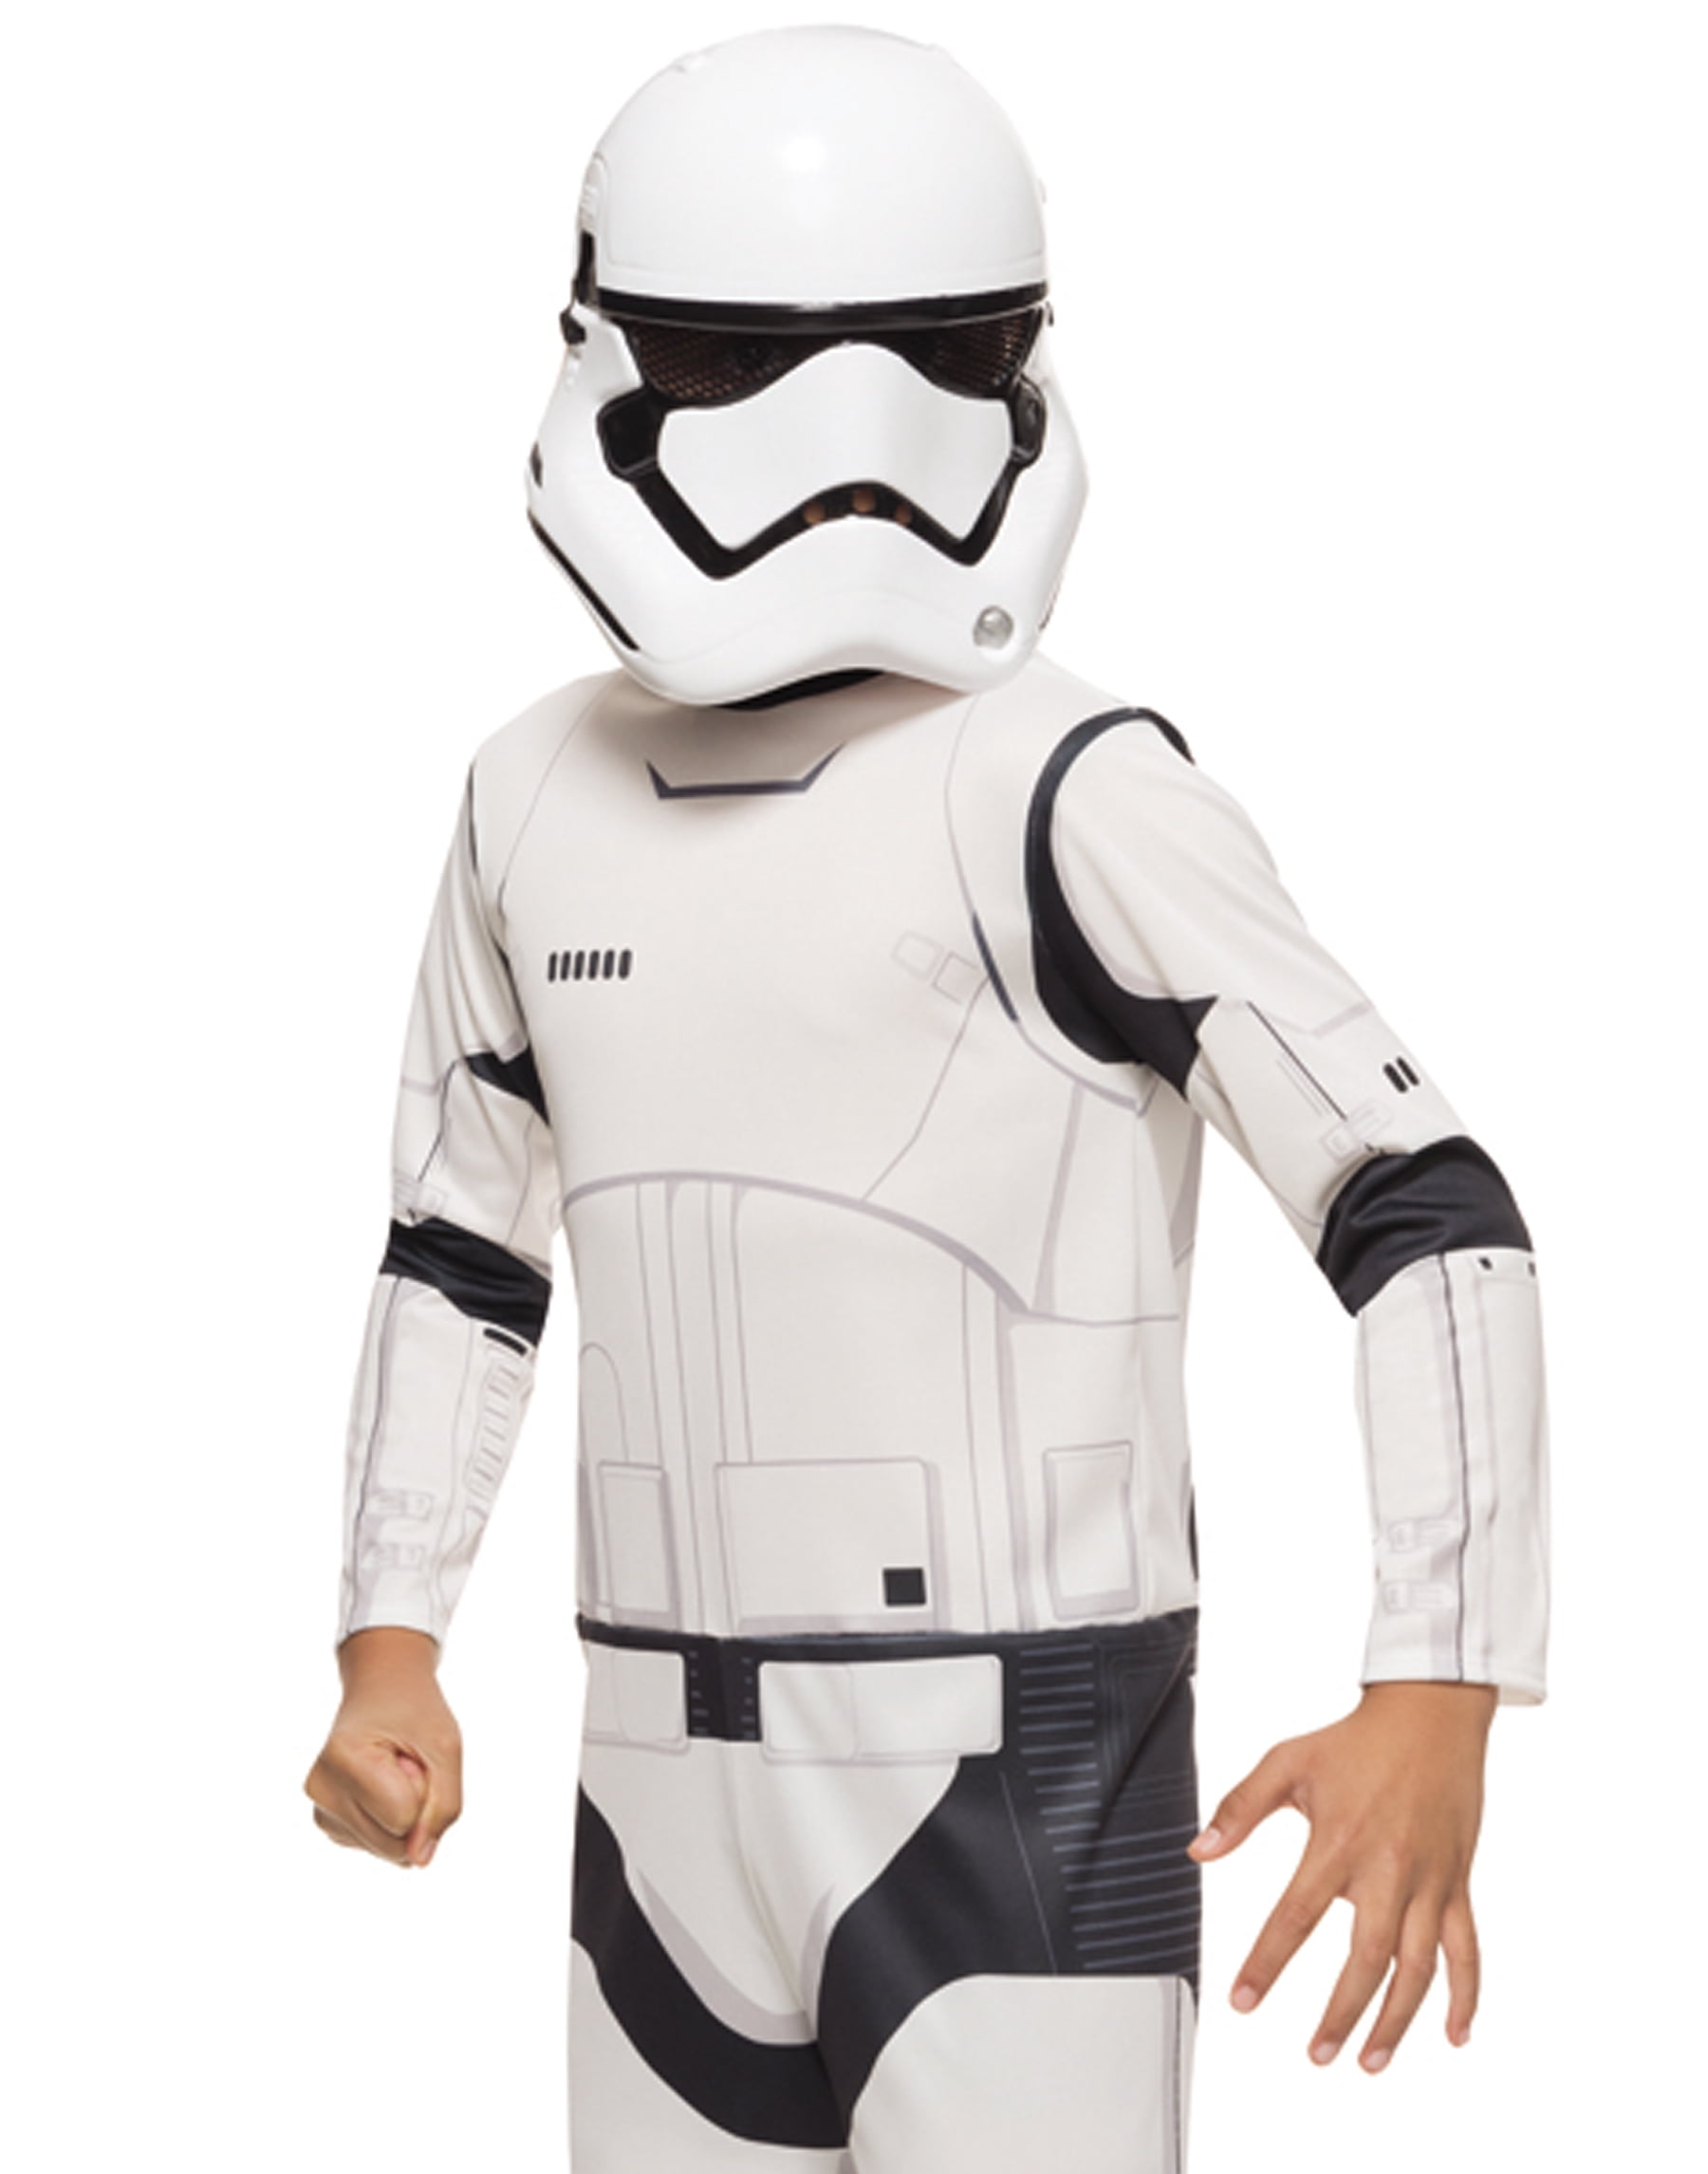 Details about   Disney Store Star Wars STORMTROOPER FORCE AWAKENS COSTUME Halloween 11 12 13